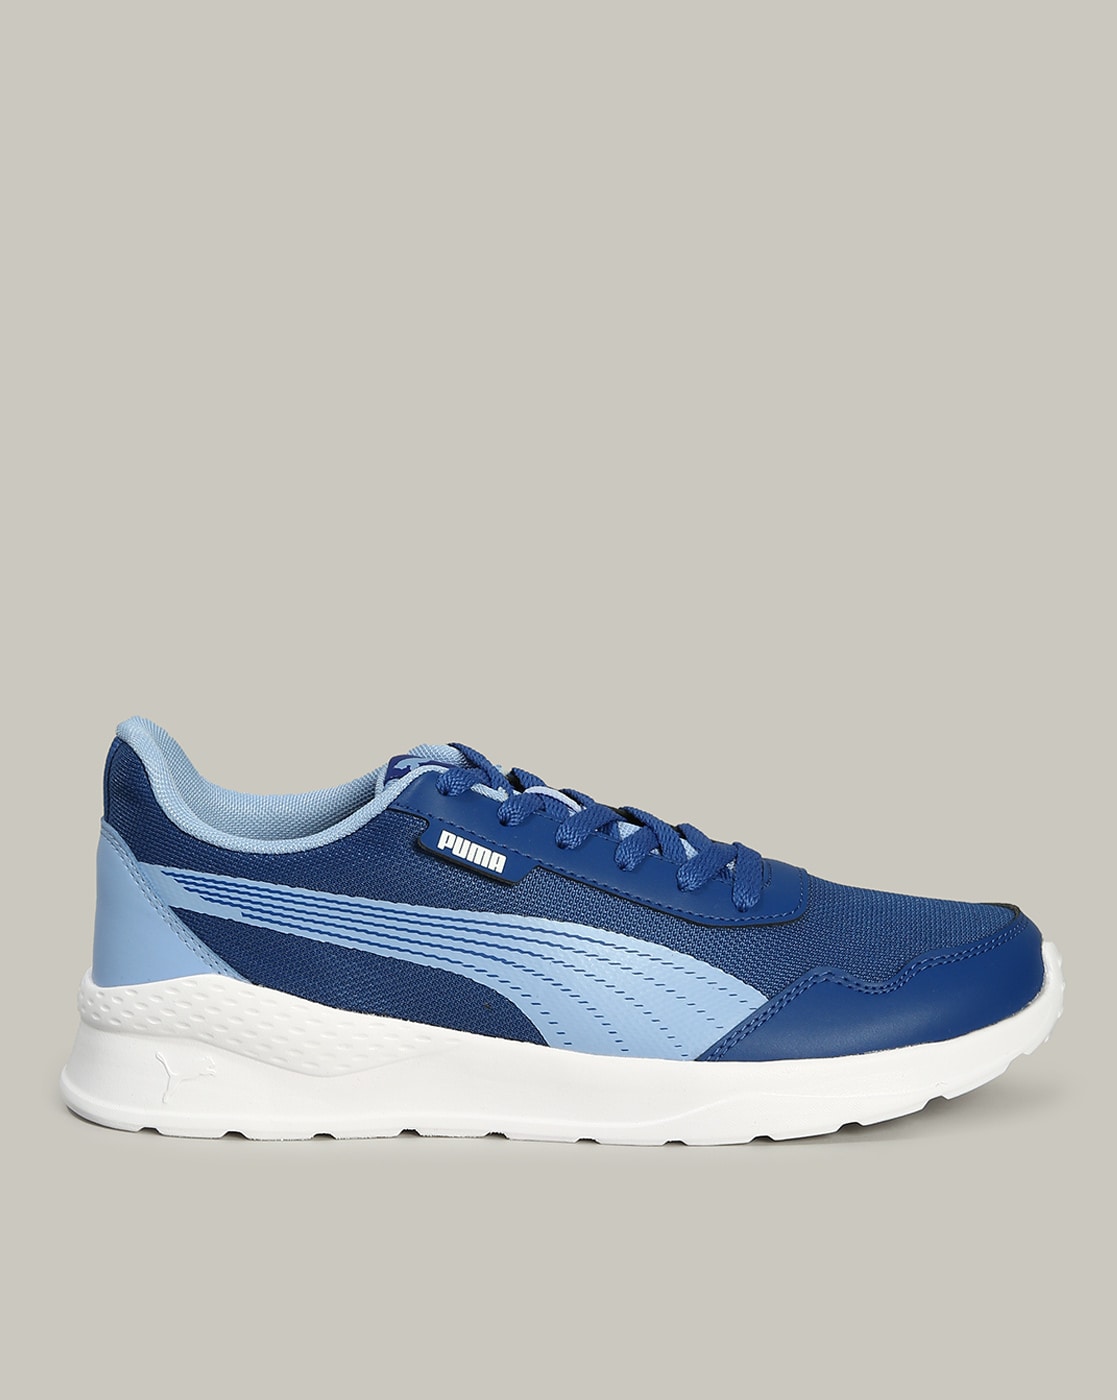 MEN Puma GV Special Reversed Sneakers Navy Blue / White | eBay